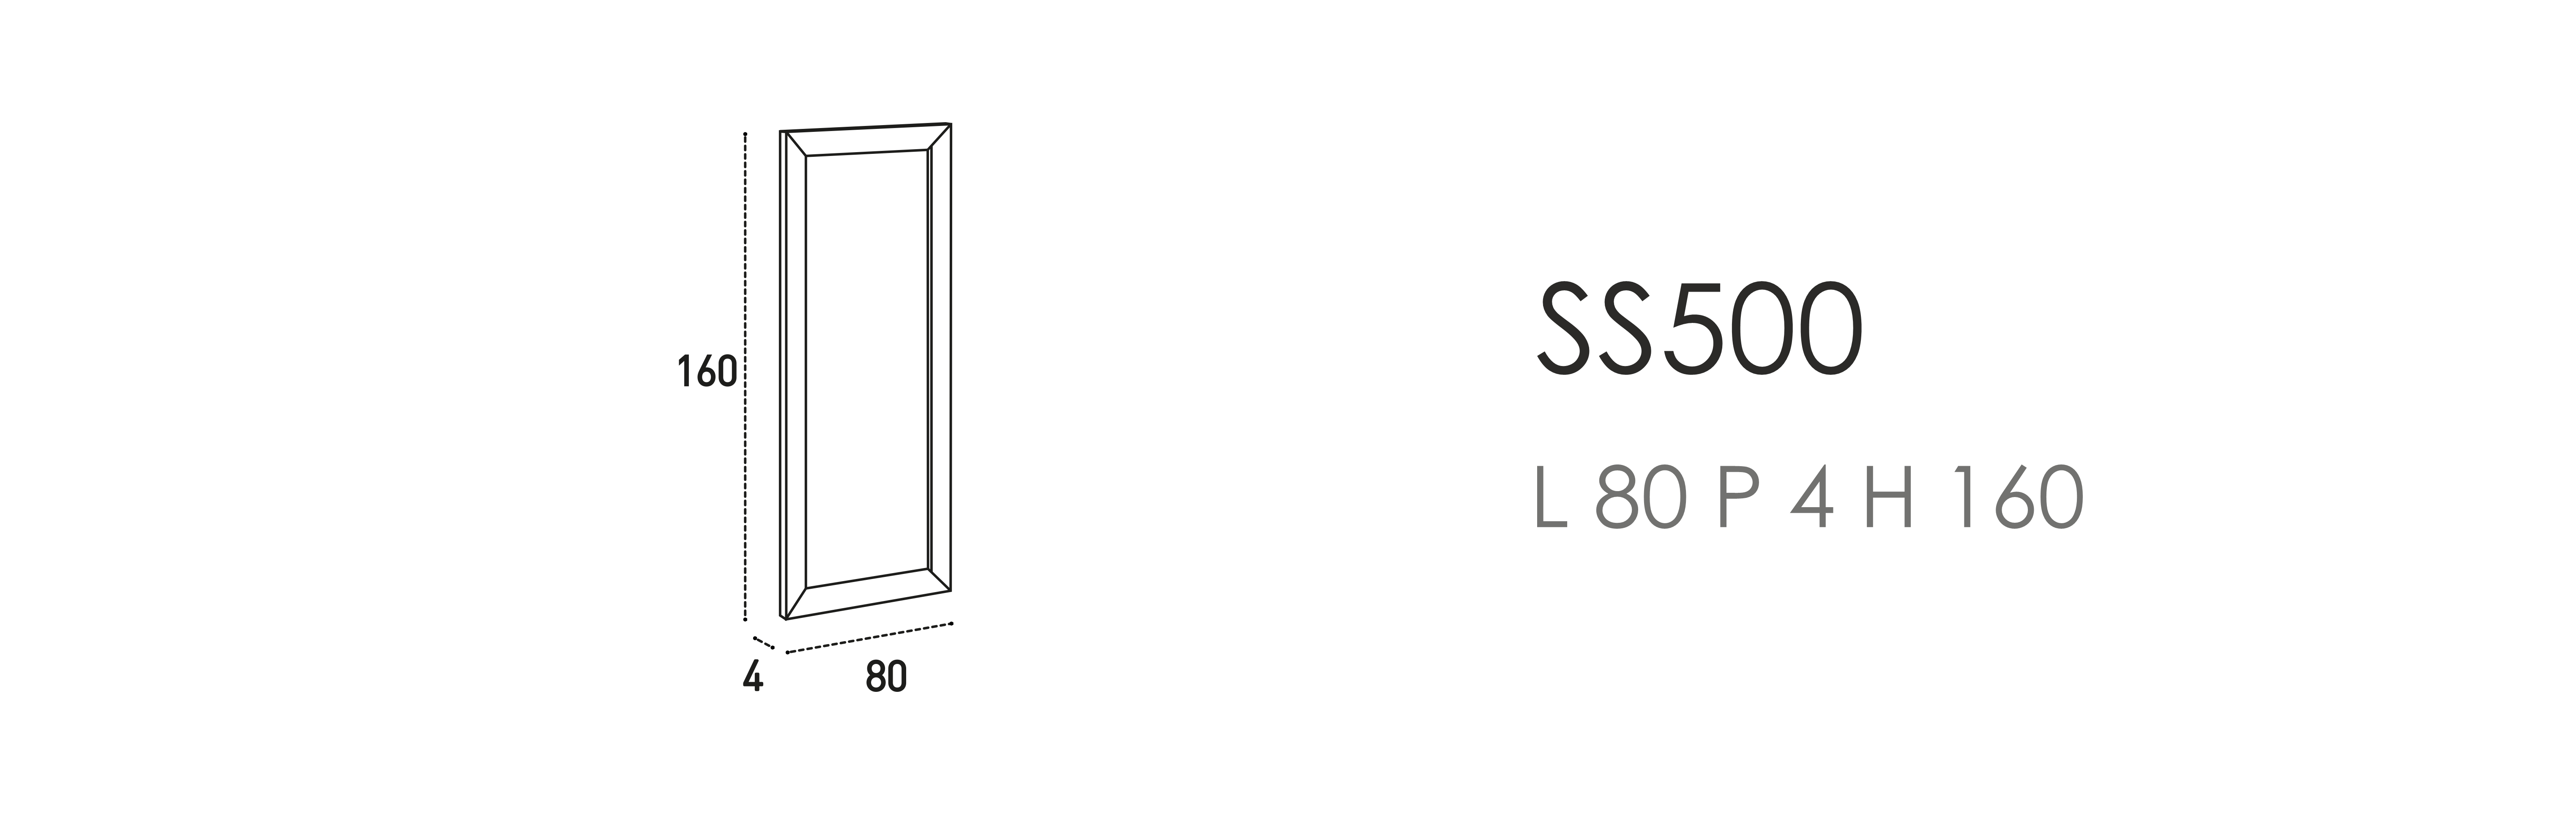 SS500 L 80 P 4 H 160